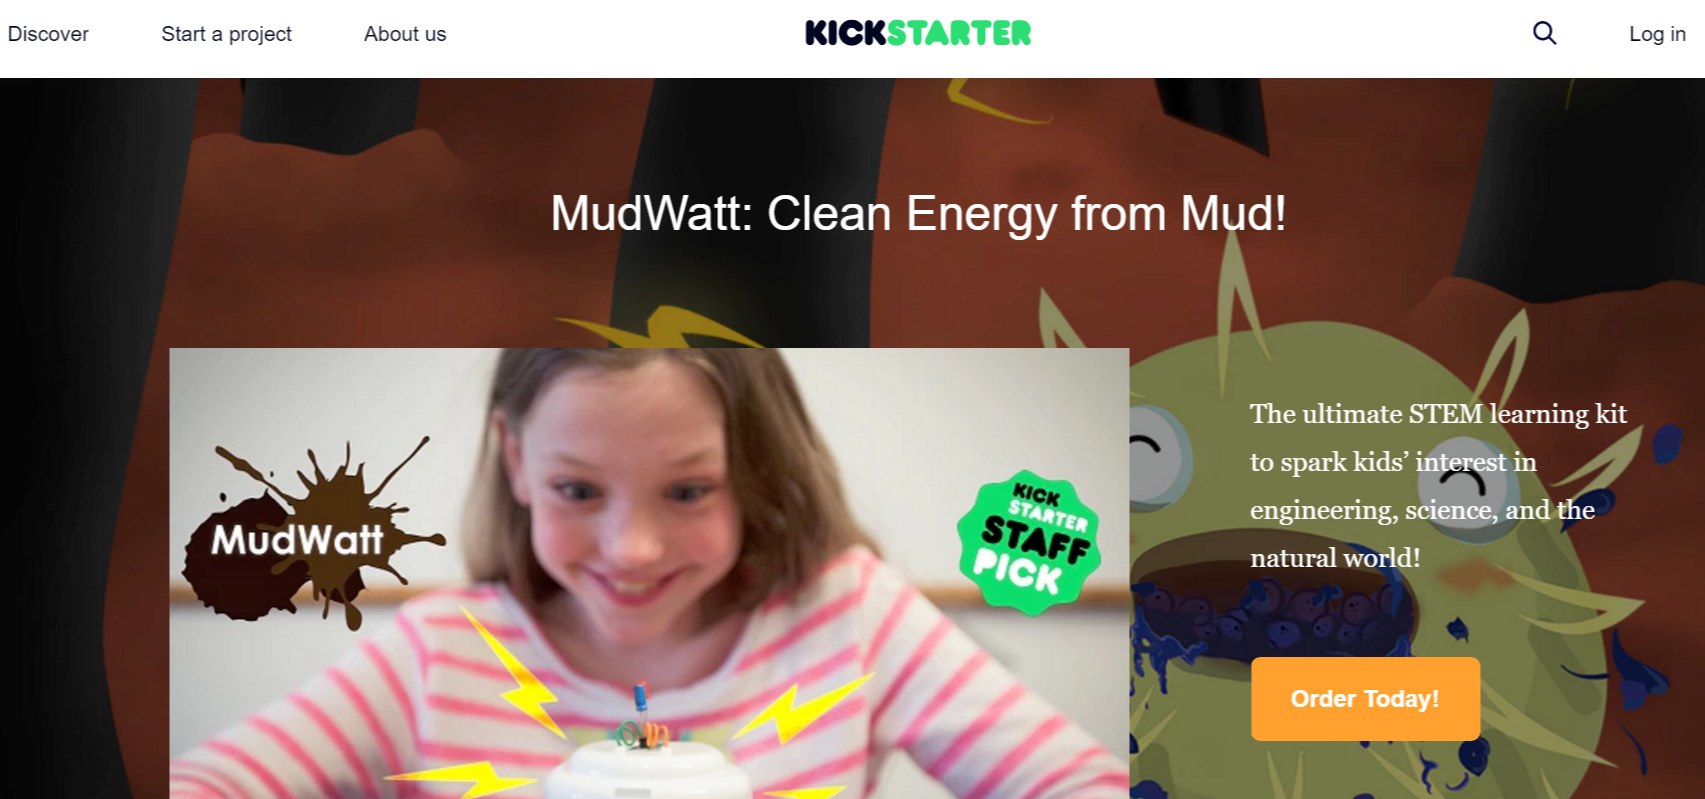 kickstarter page for mudwatt